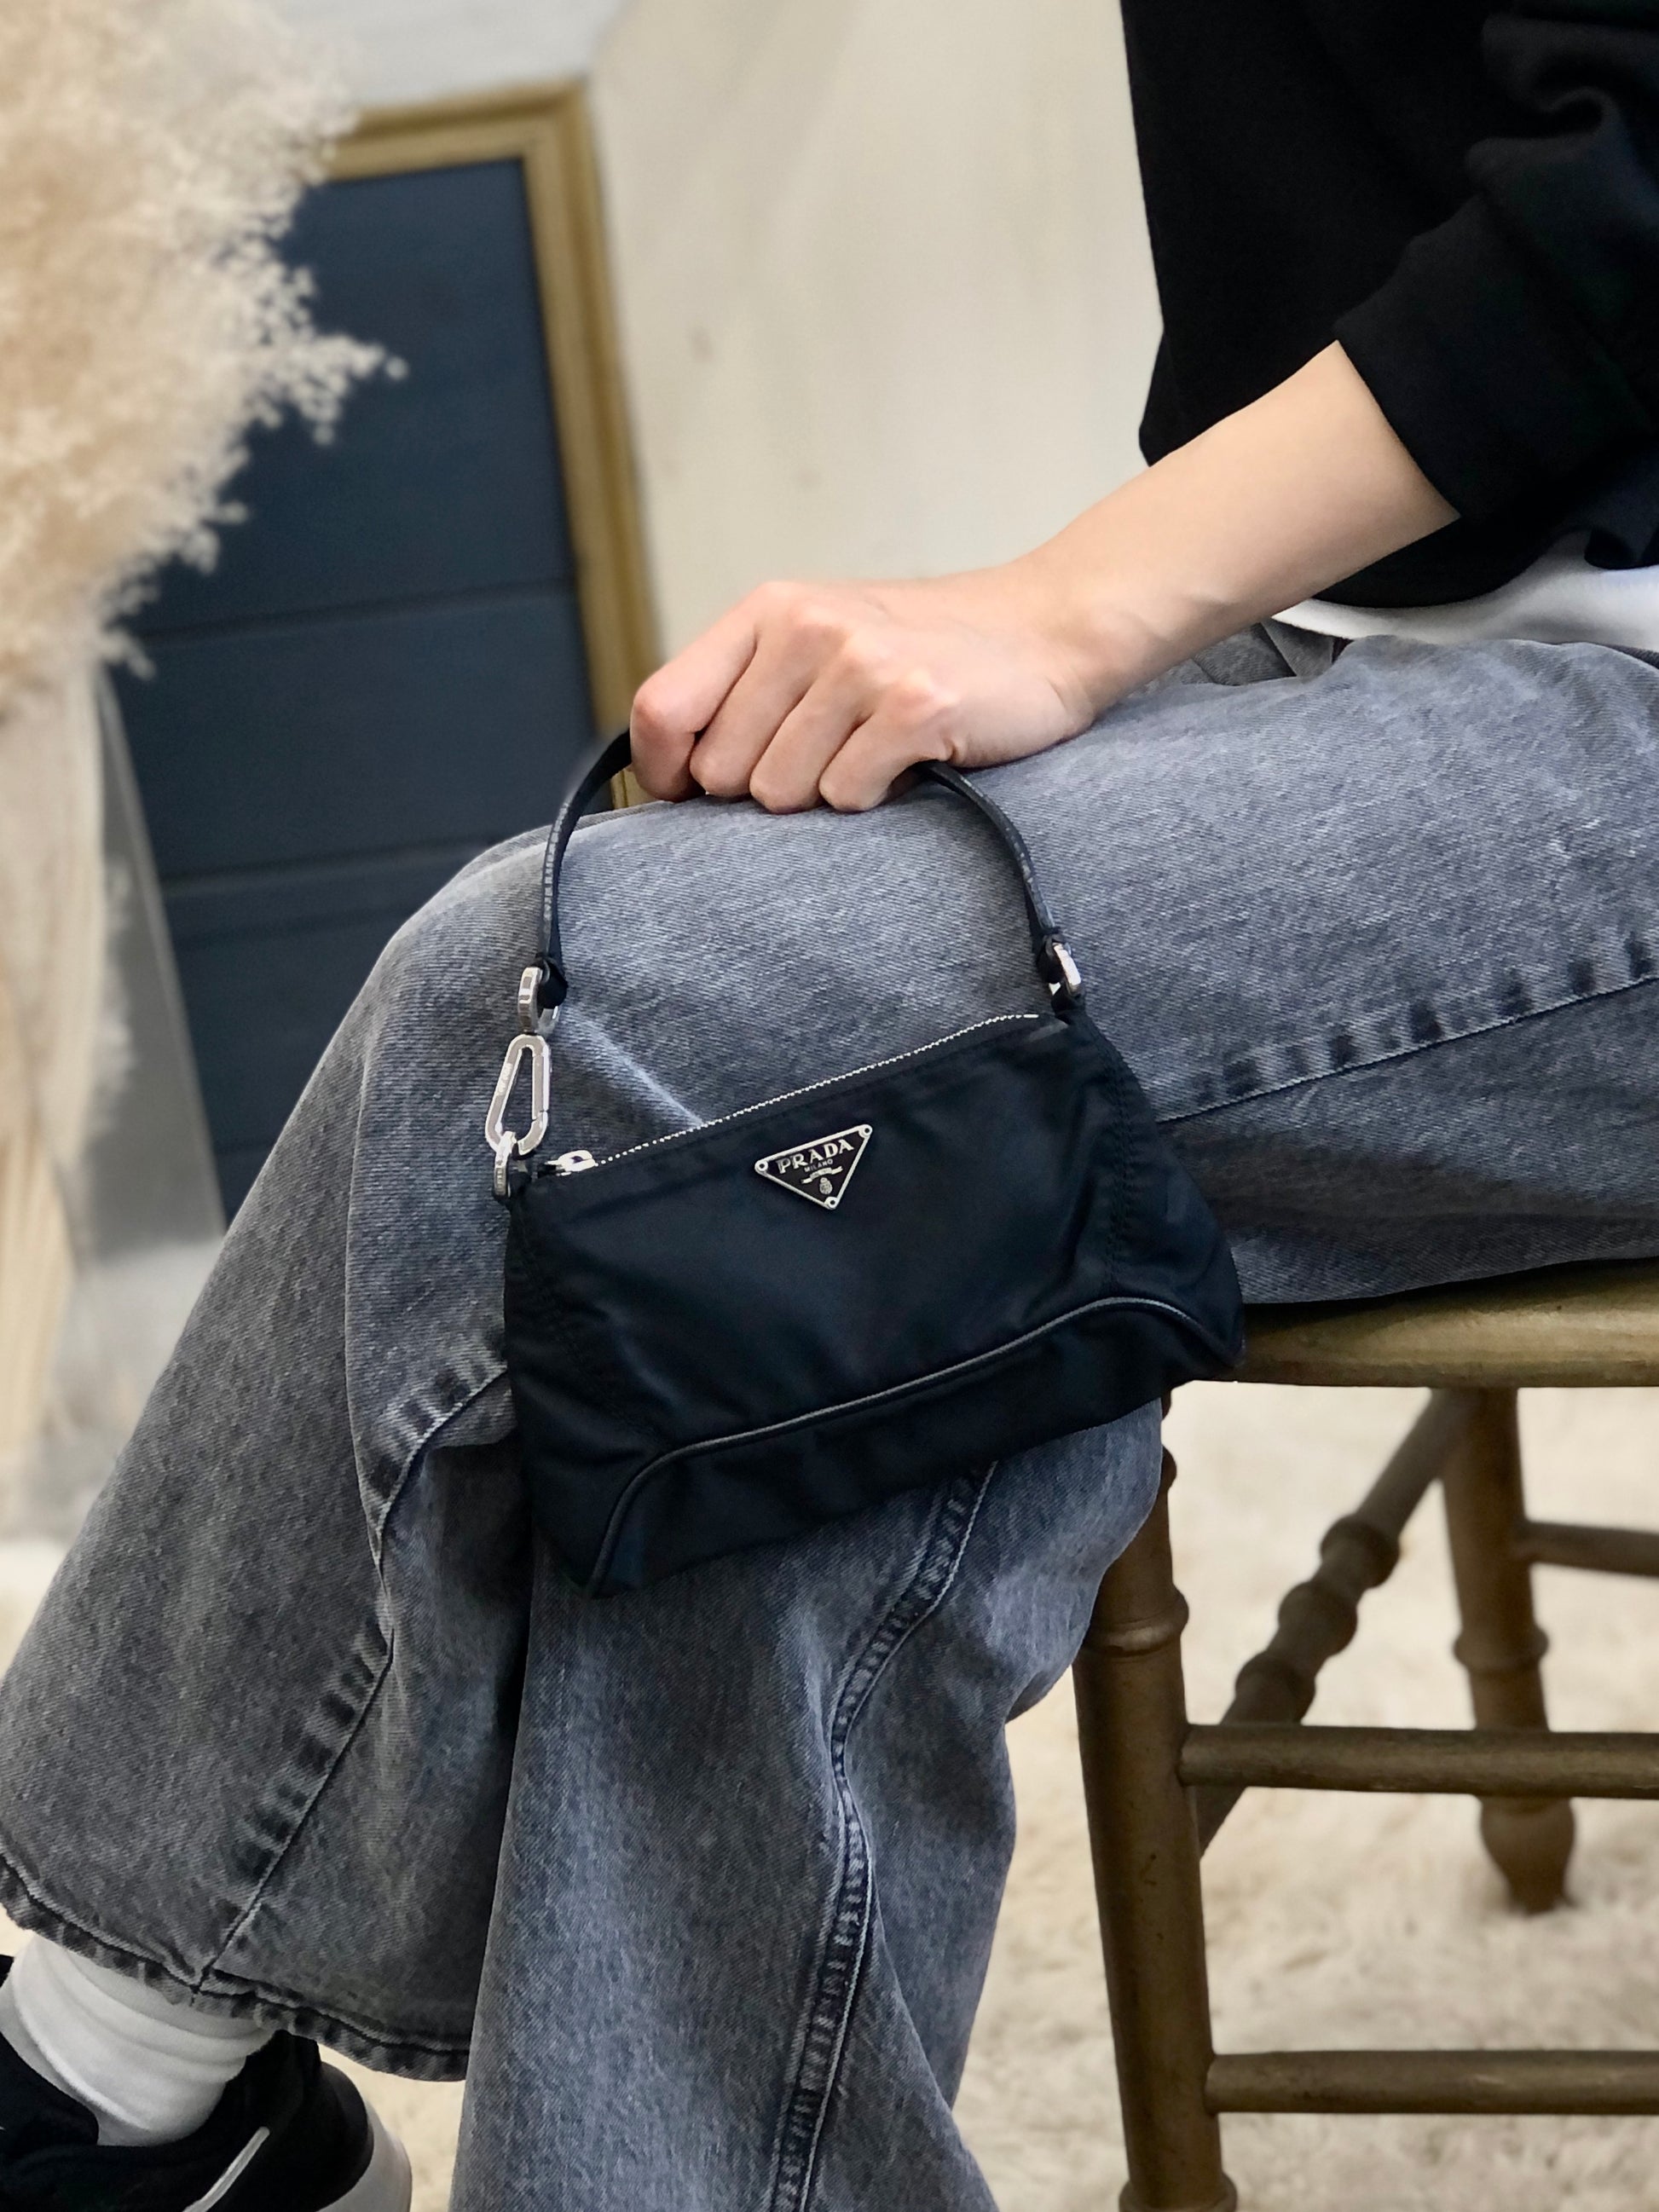 Prada Re-Edtion Nylon Quilted Black Triangle Logo Crossbody Bag